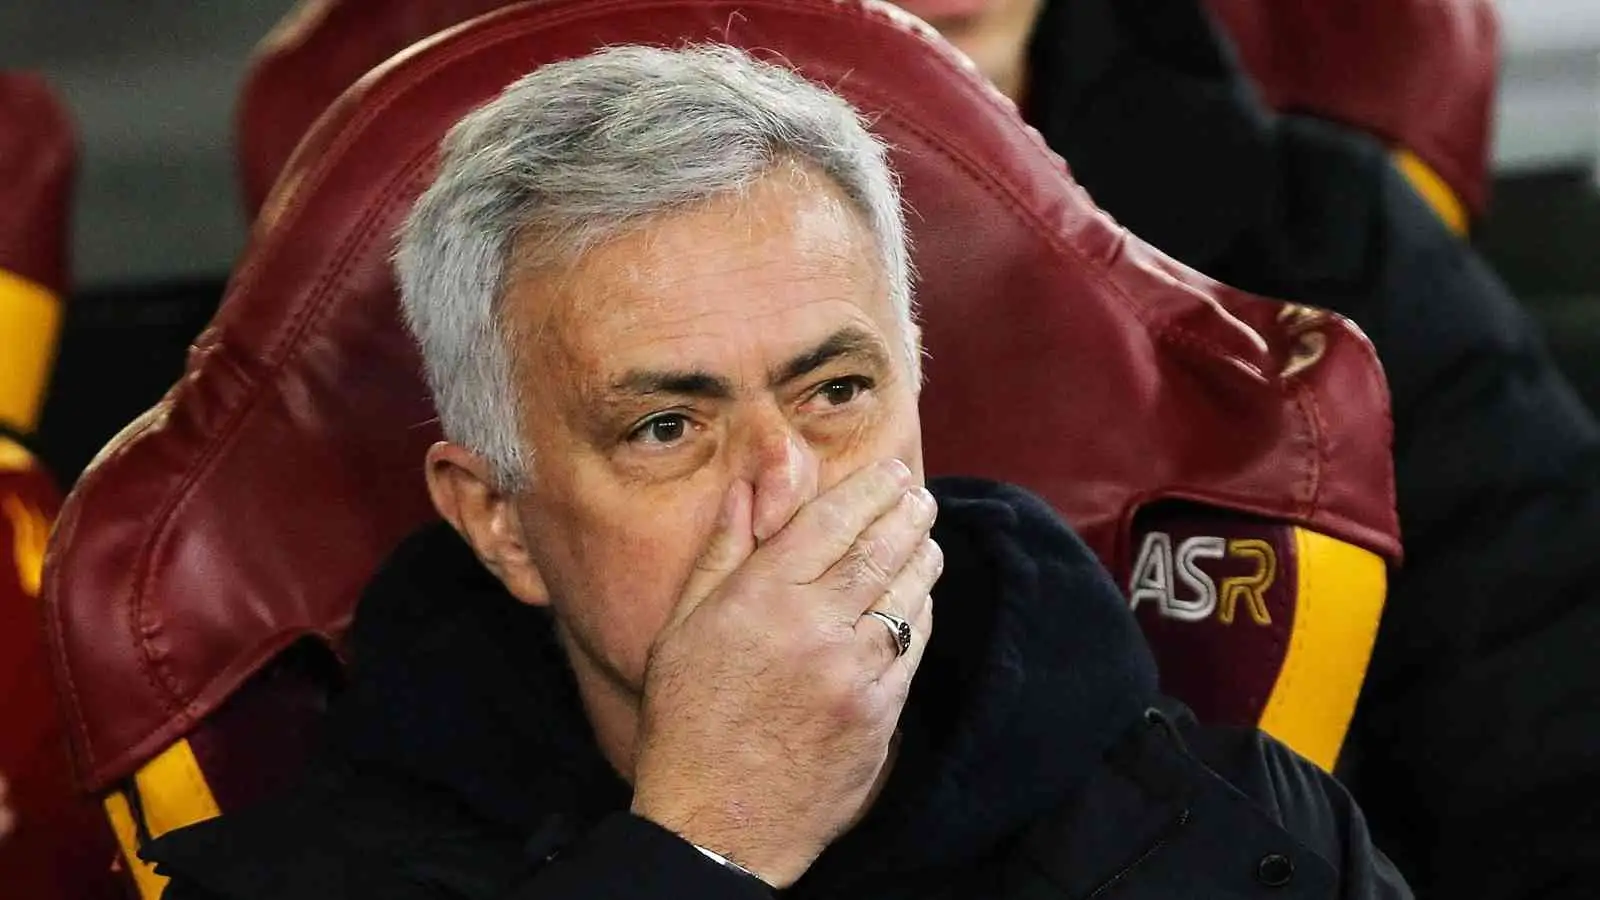 Jose Mourinho on the Roma bench